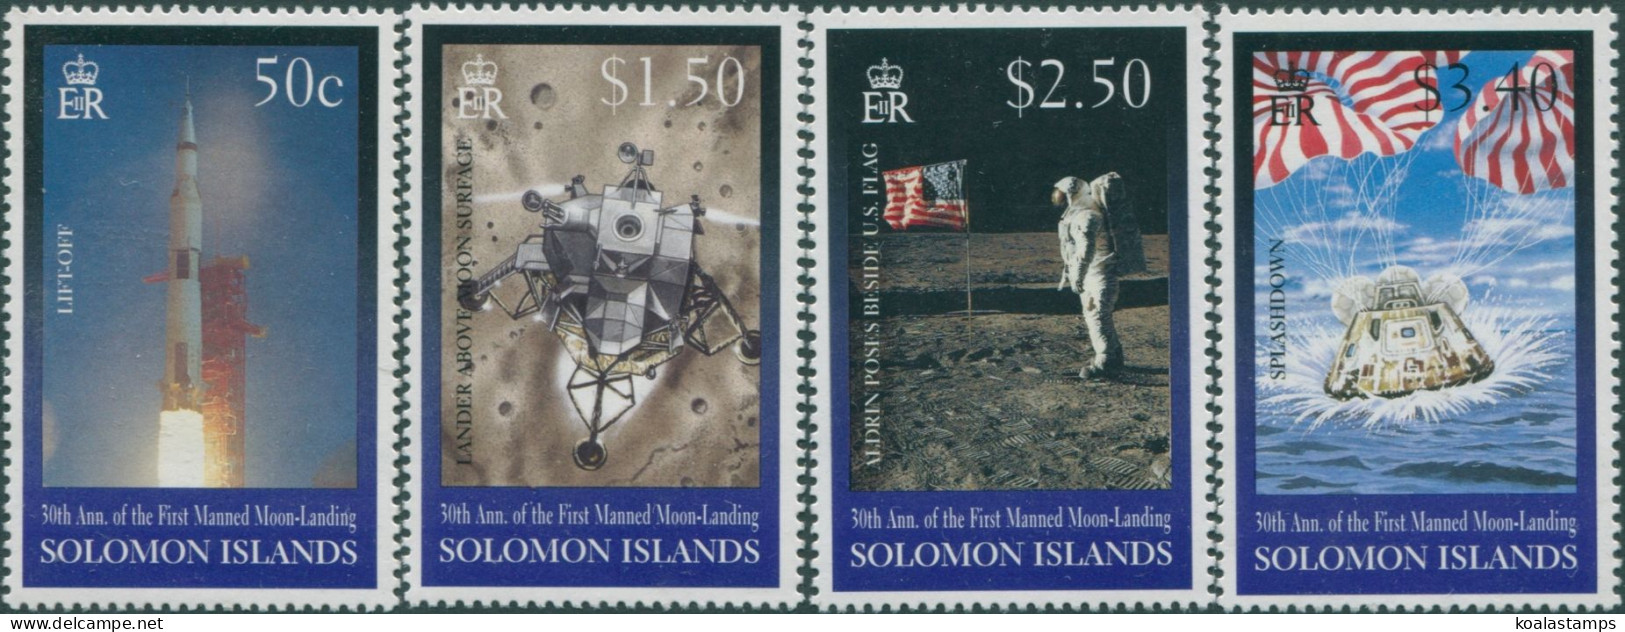 Solomon Islands 1999 SG936-939 Moon Landing Set MNH - Solomon Islands (1978-...)